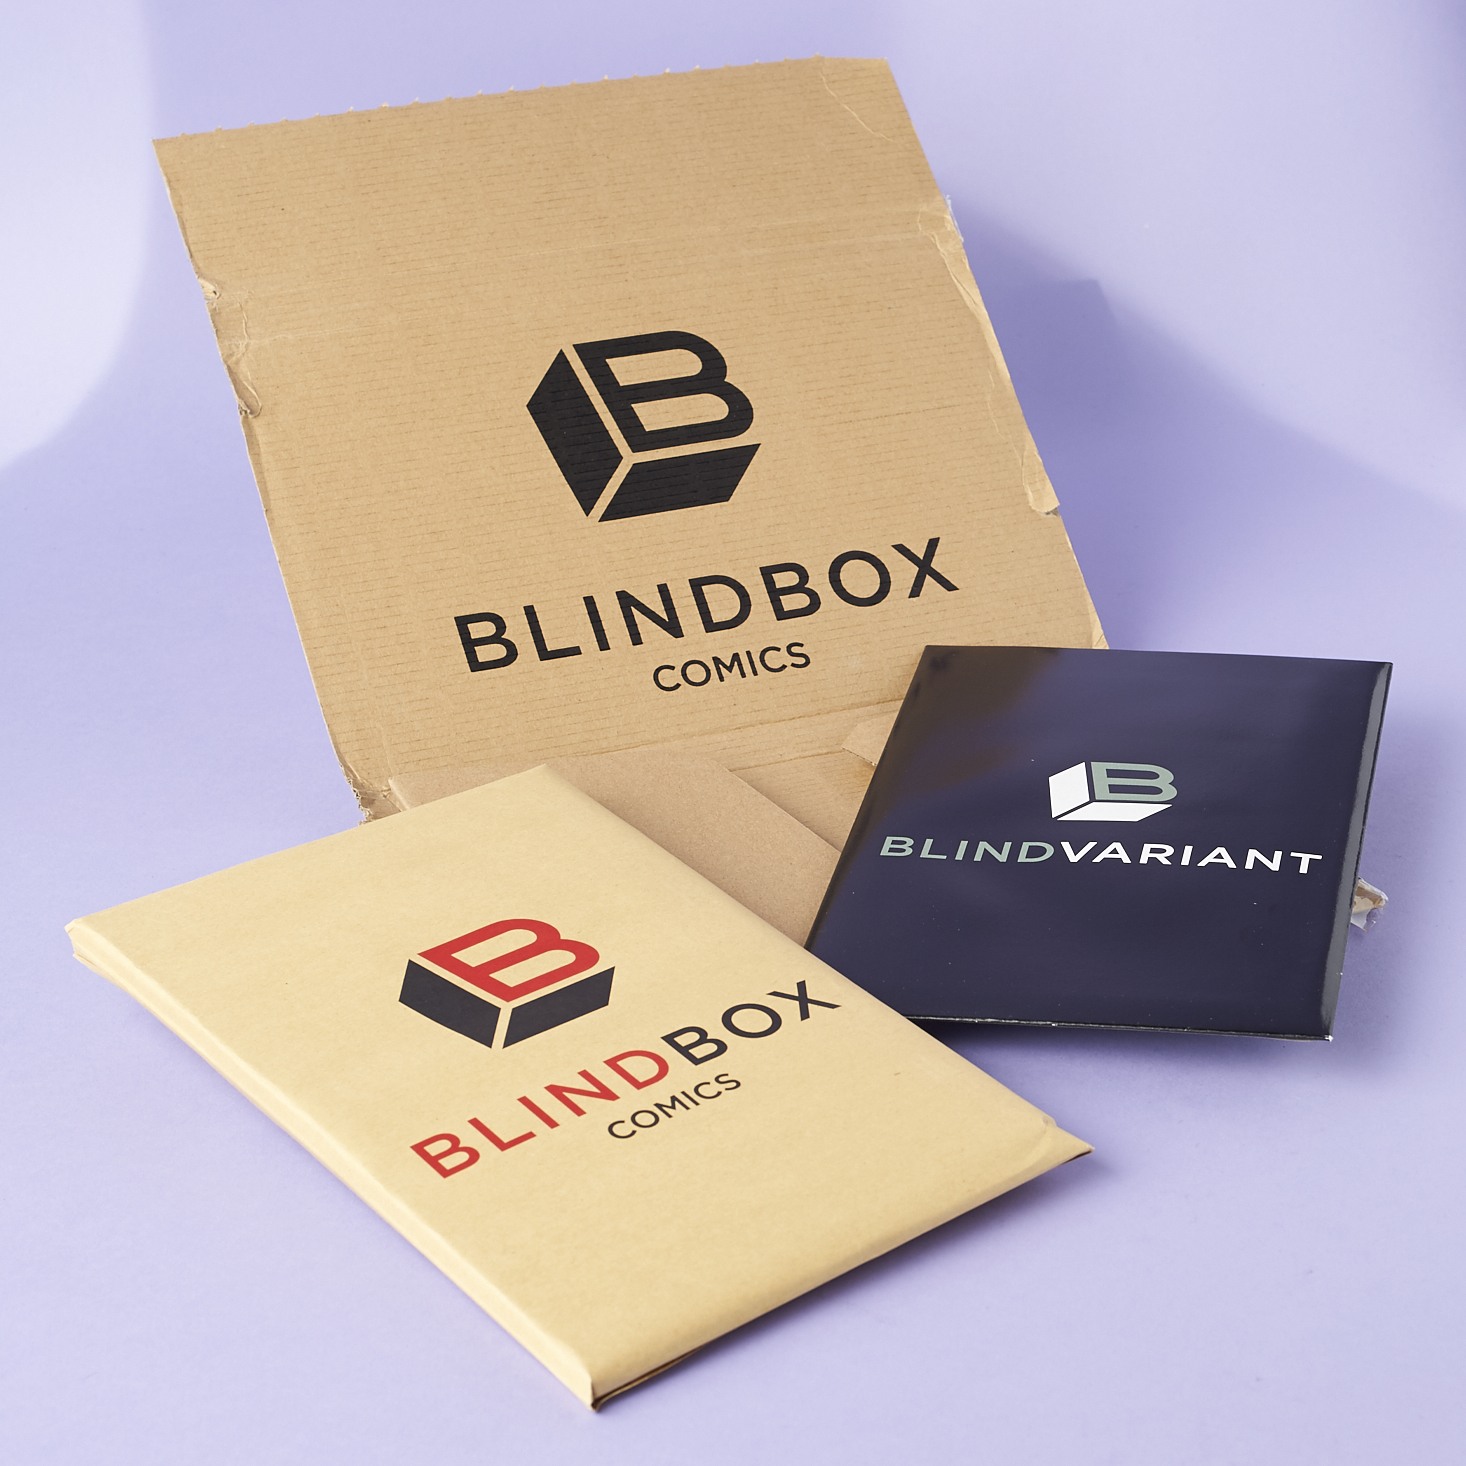 Blindbox Comics Subscription Box Review – March 2017